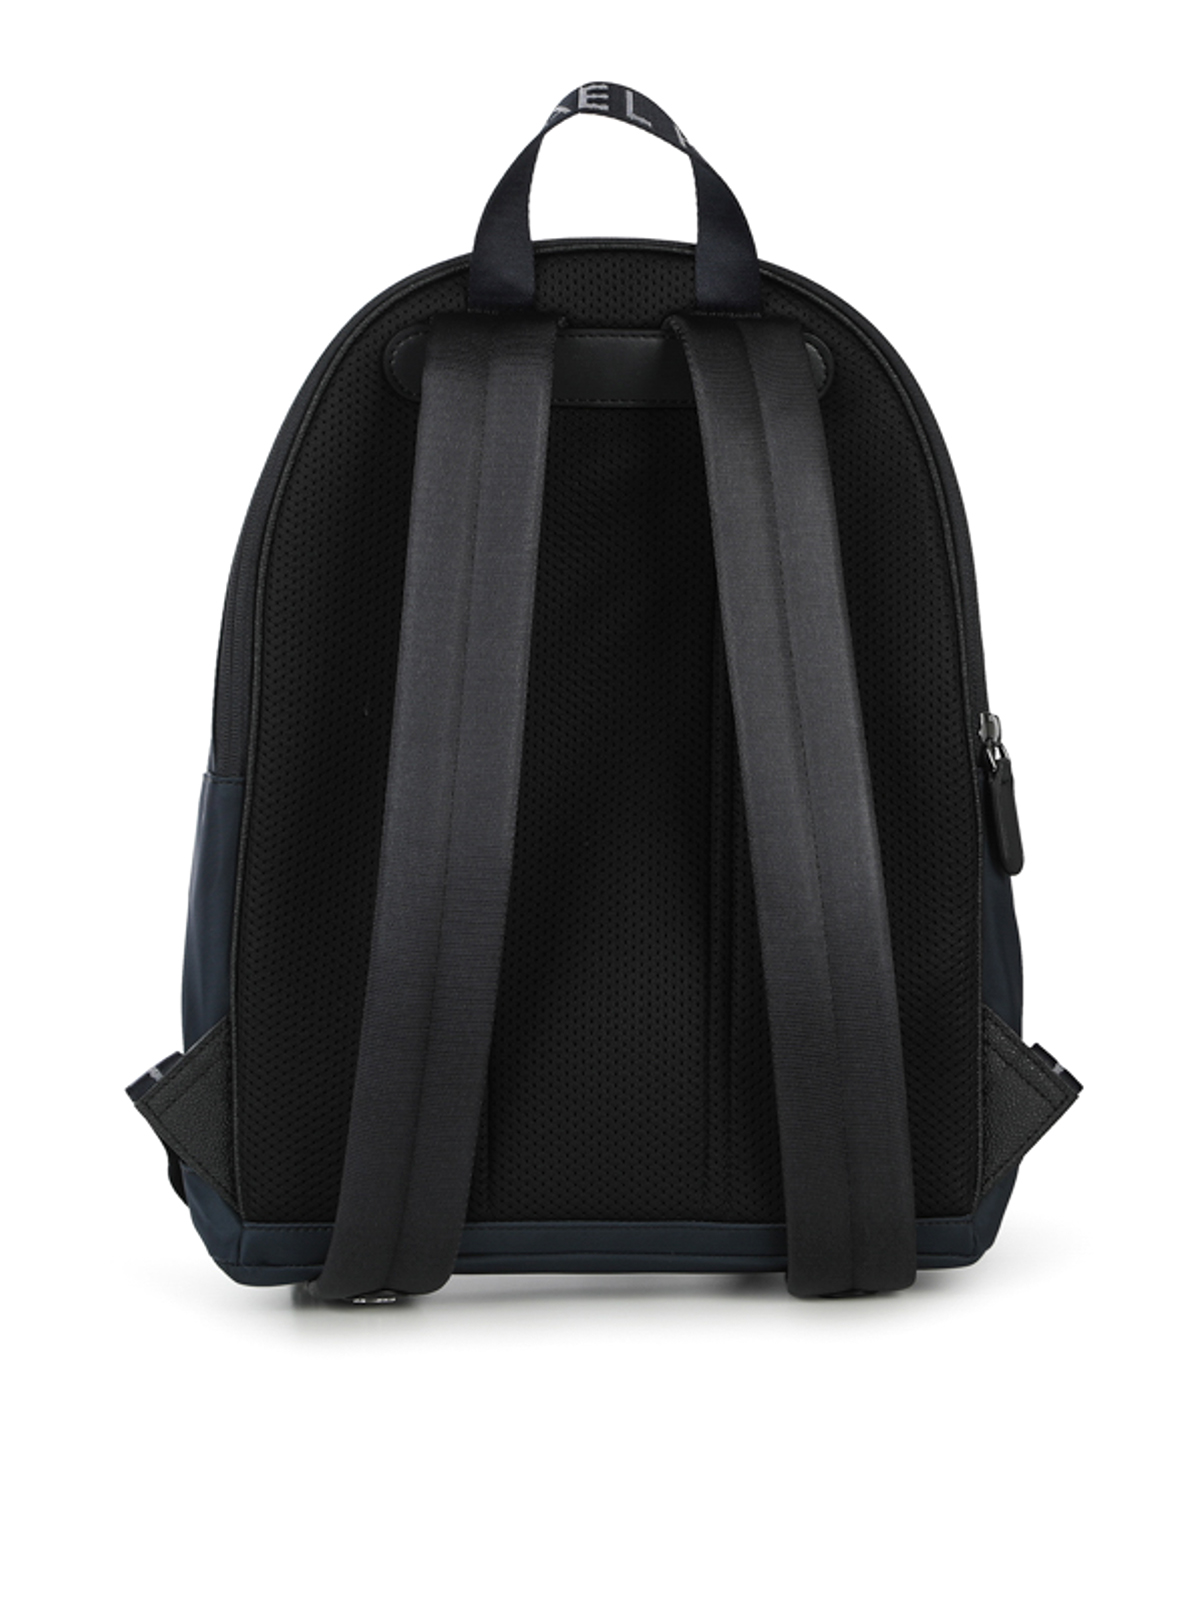 Michael Kors Laptop Compartment Backpacks for Women